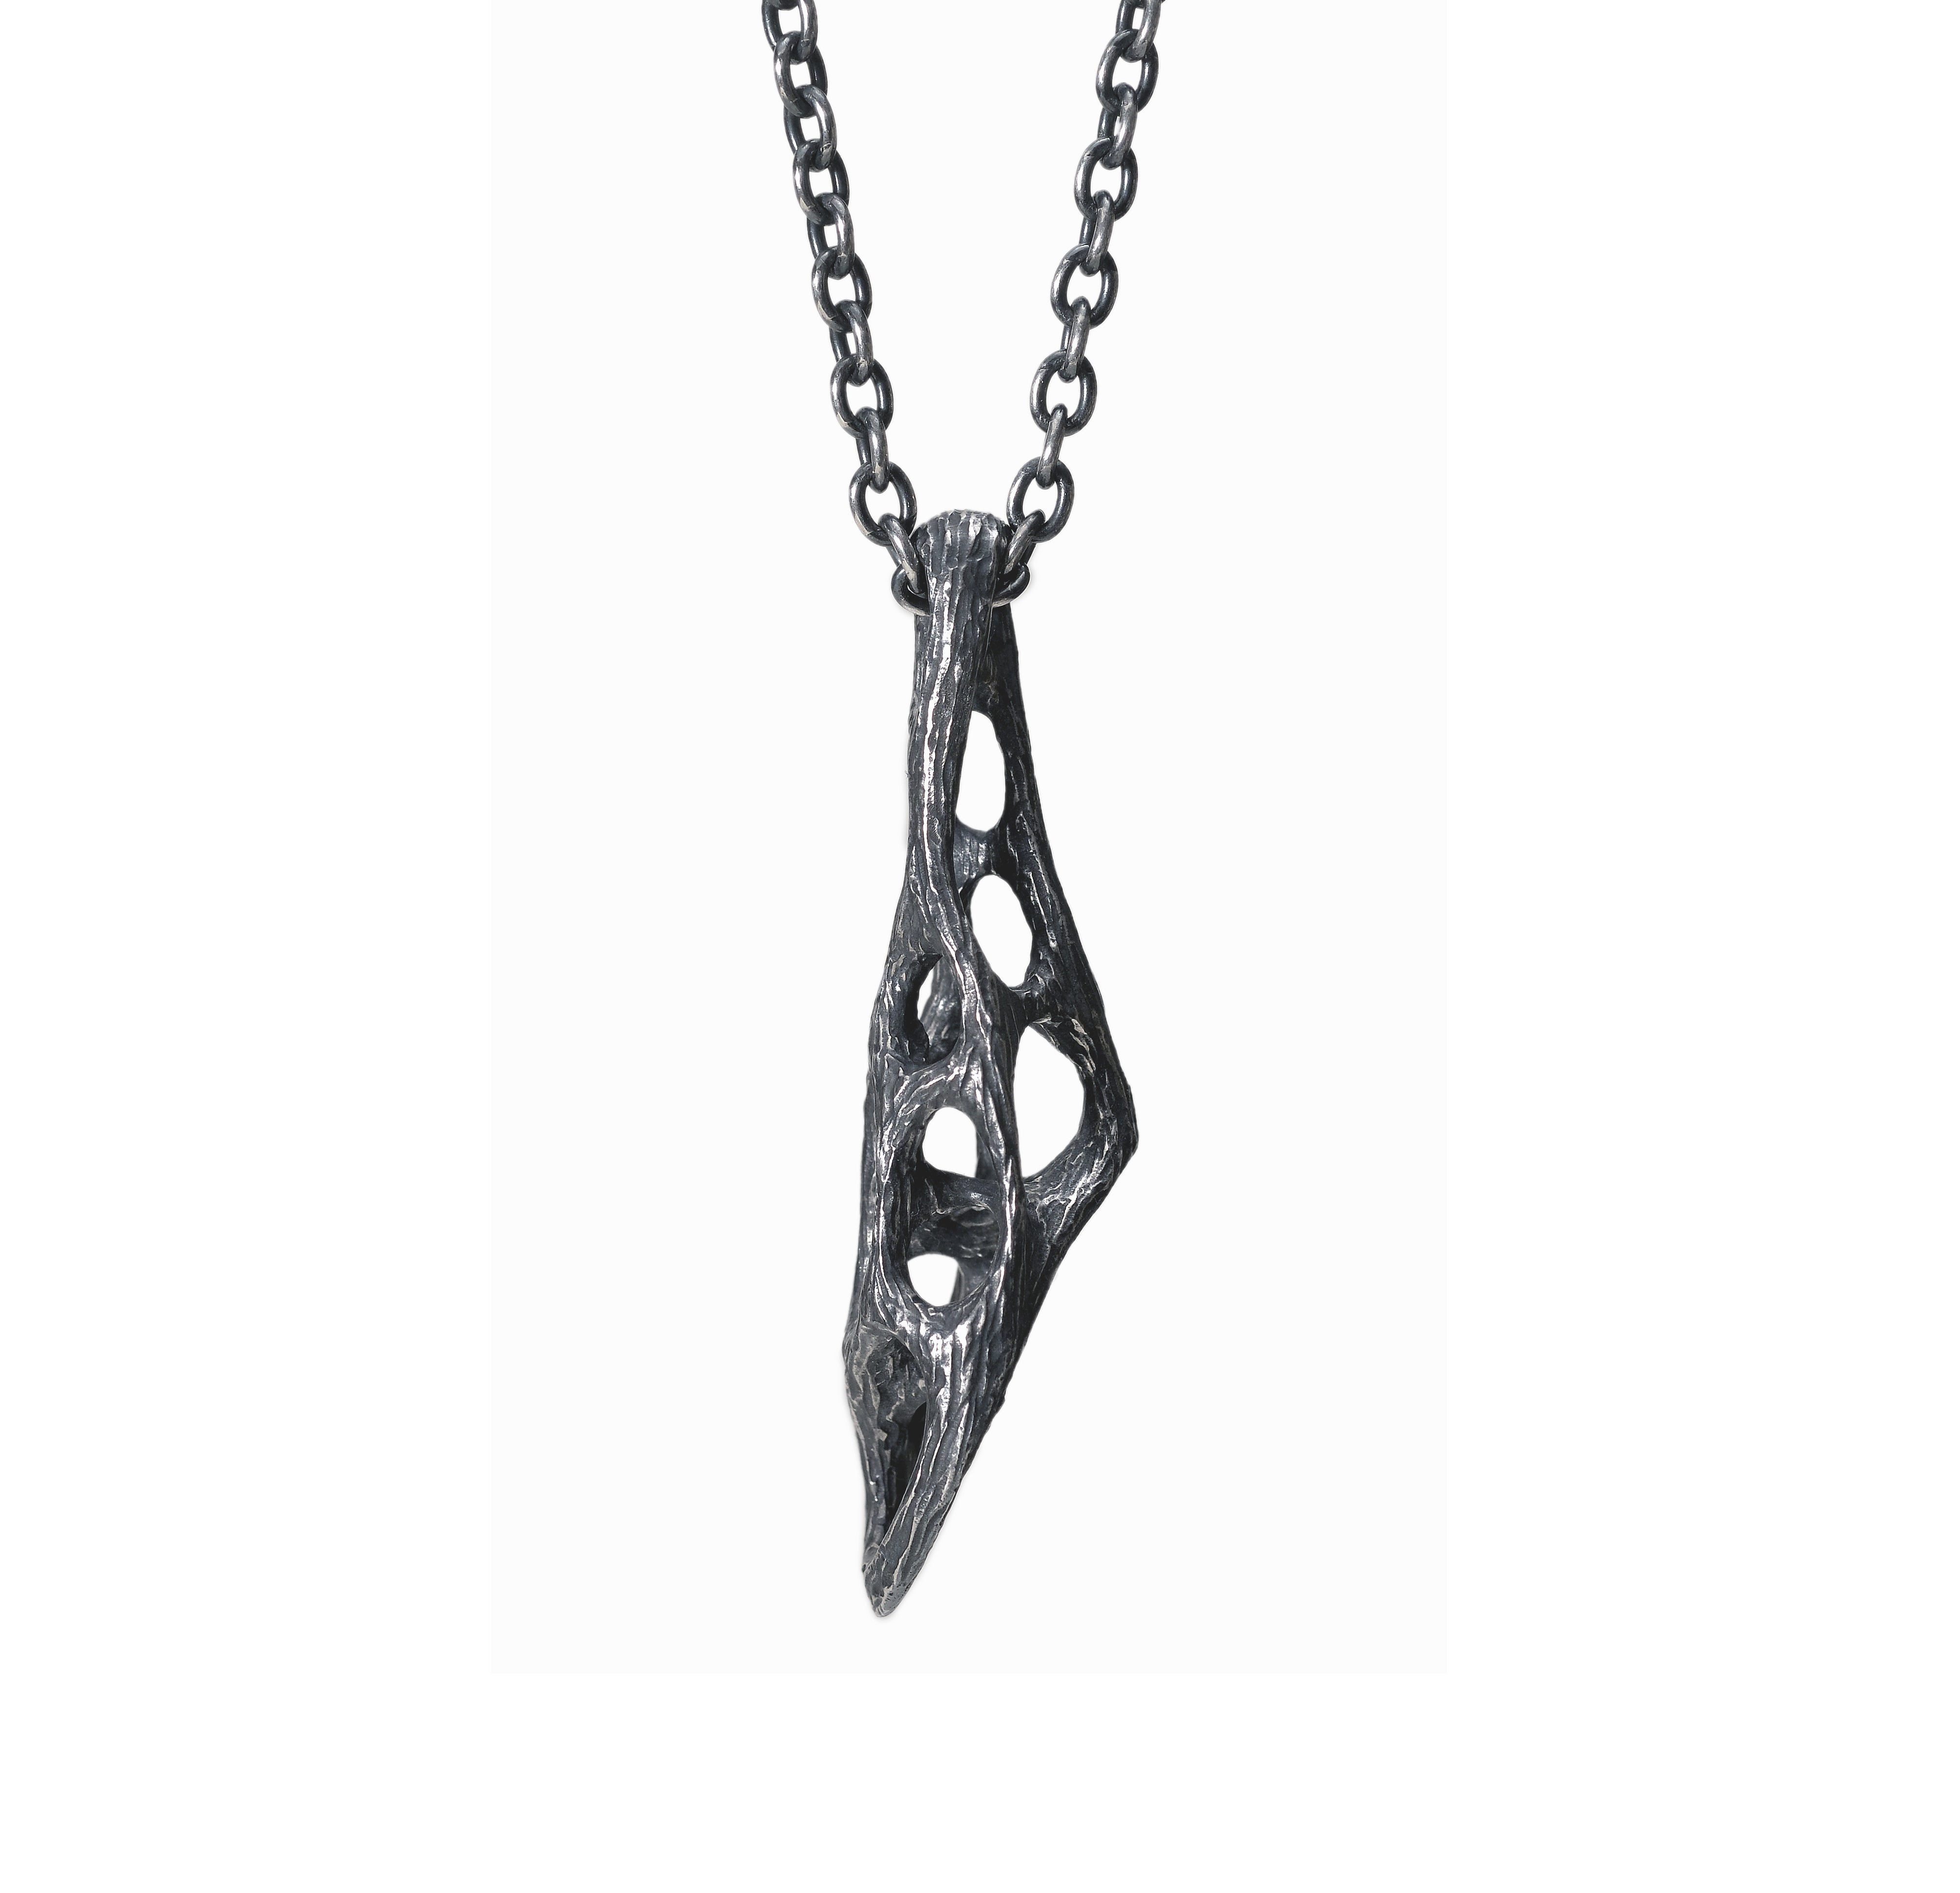 hollows - Silver necklace with original clasp - Avant Gardist